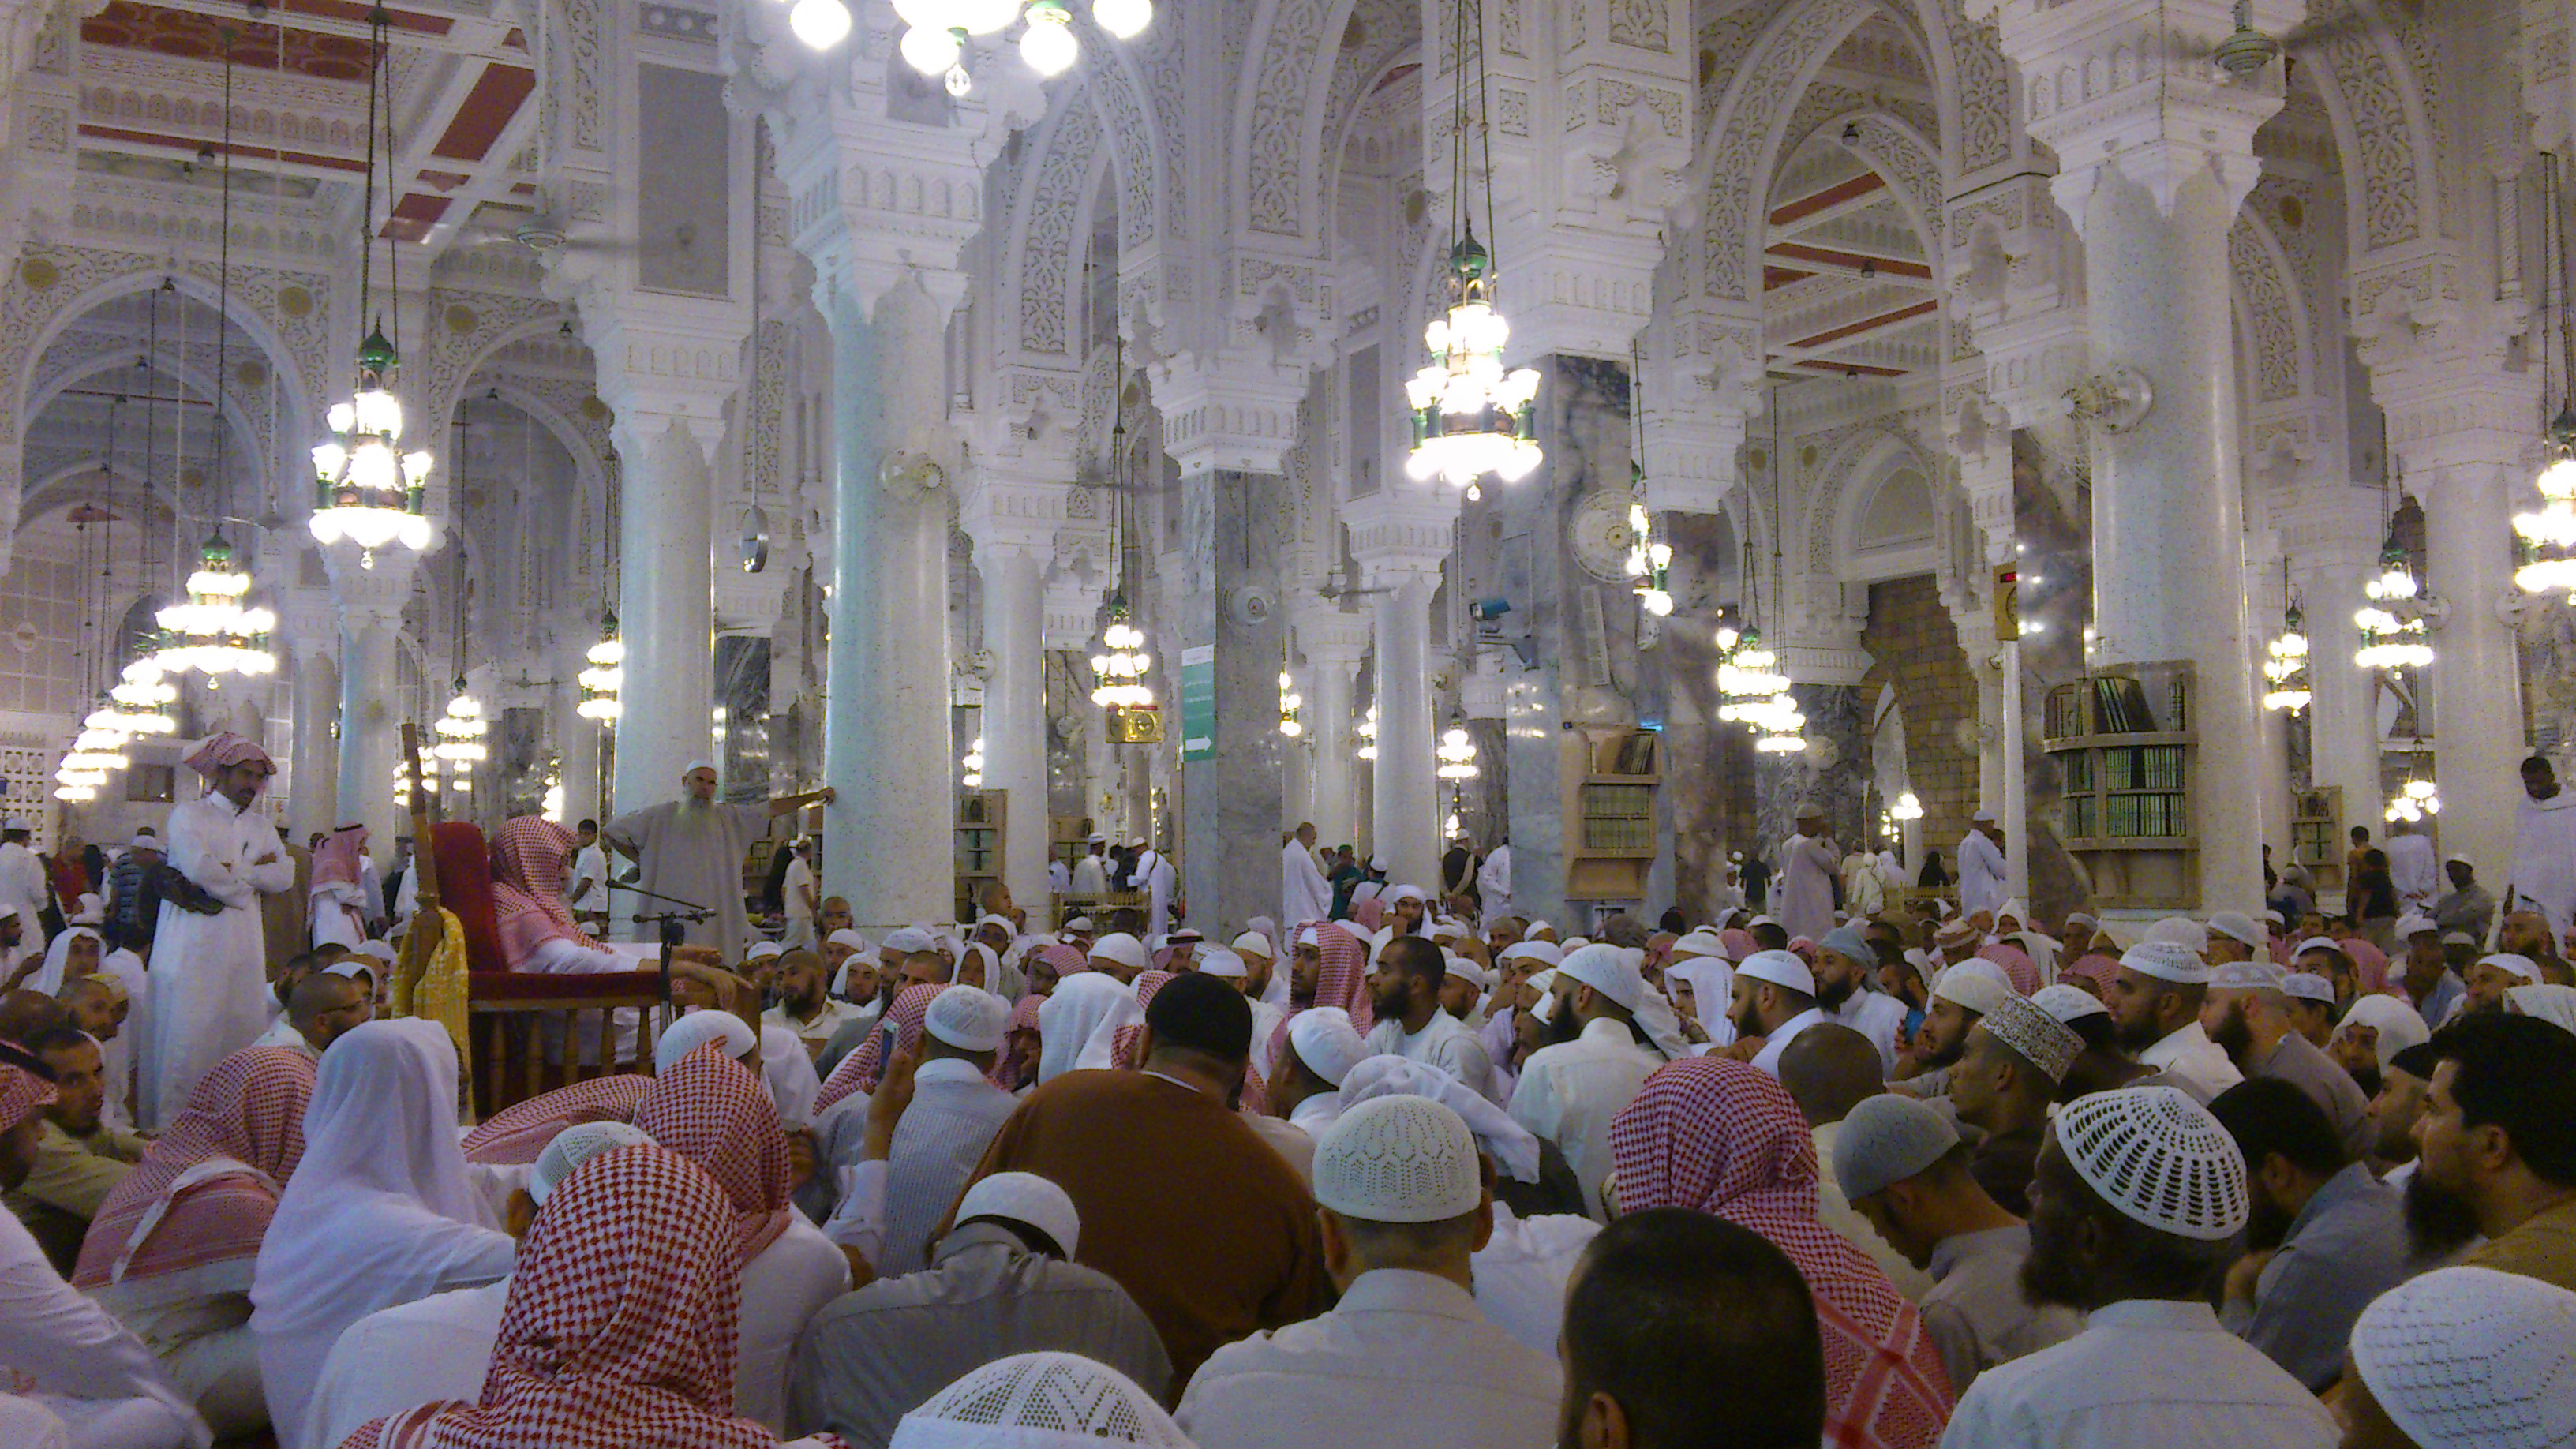 010713 – Masjid alHaram, Makkah – Sheikh Saleh Fauzan alFauzan